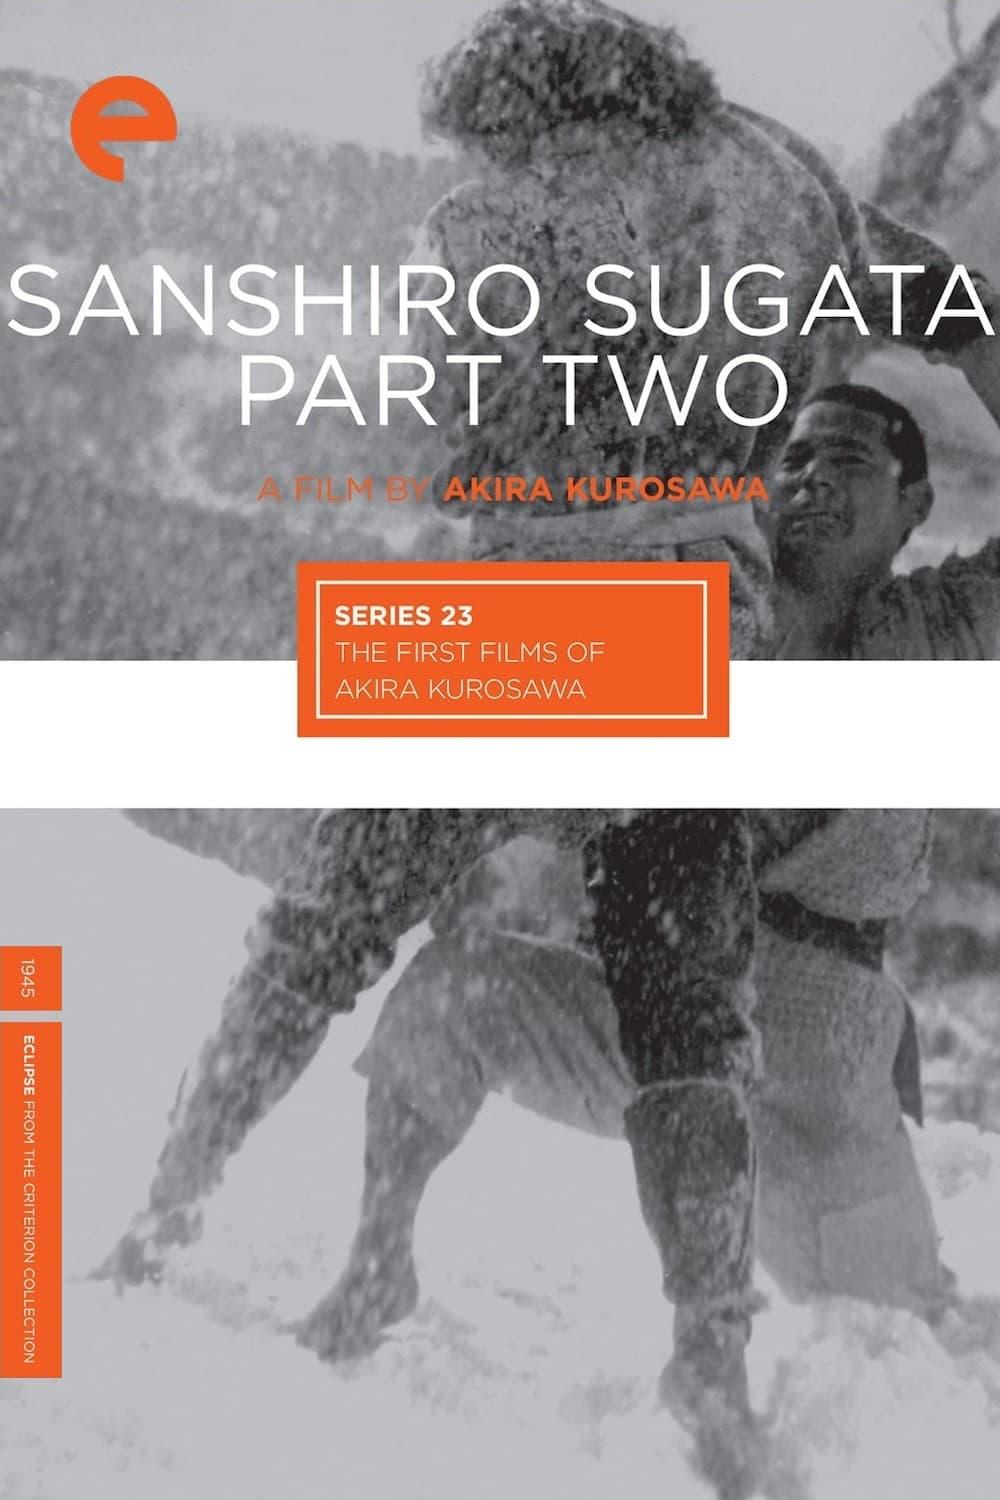 Sanshiro Sugata Part Two poster